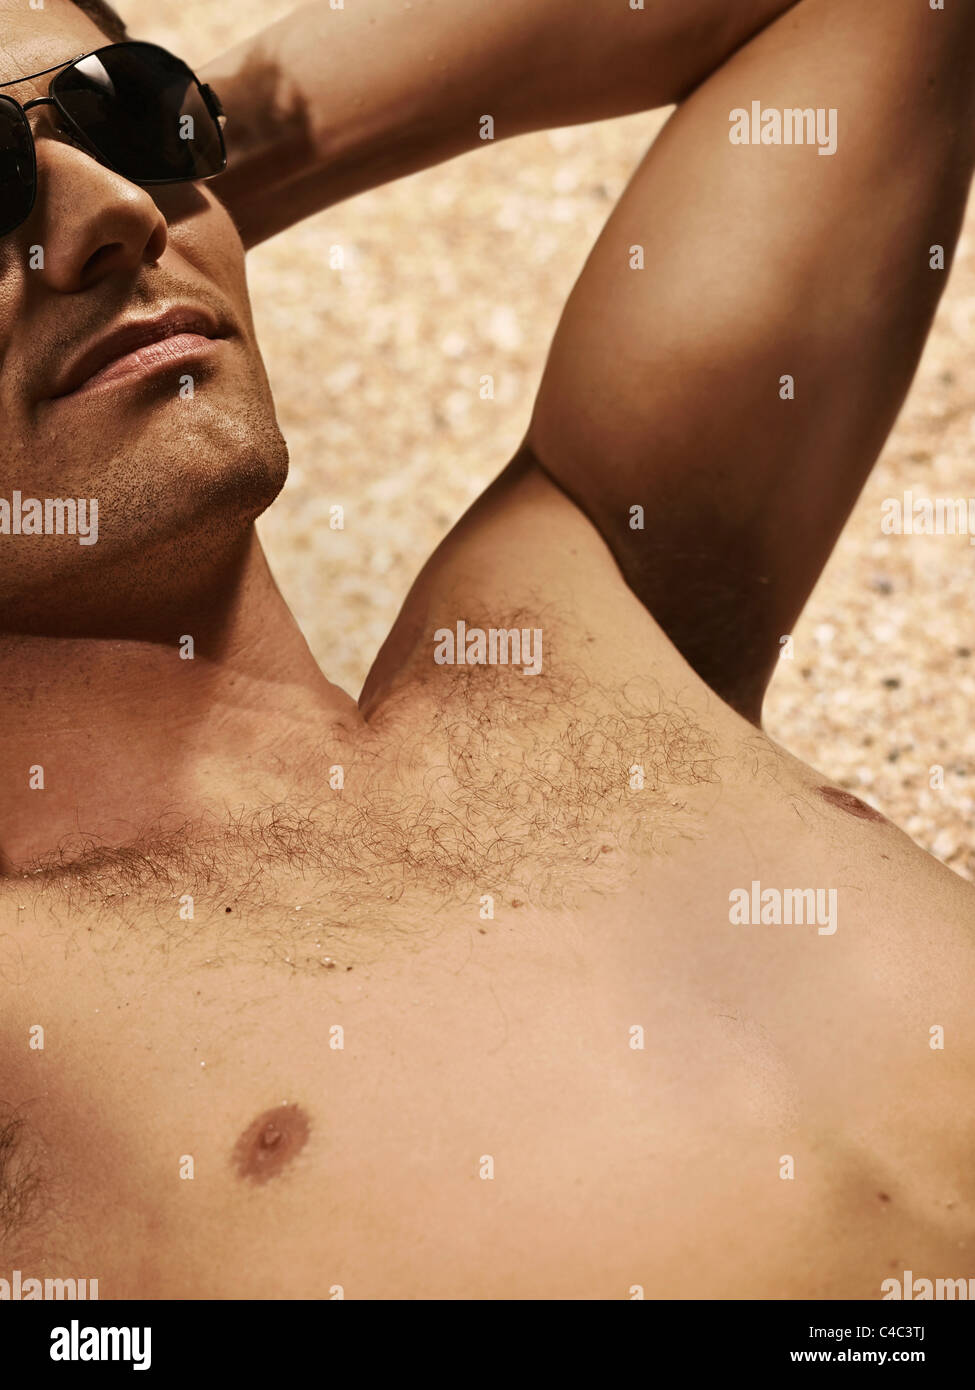 Bare-chested man sunbathing on beach Stock Photo